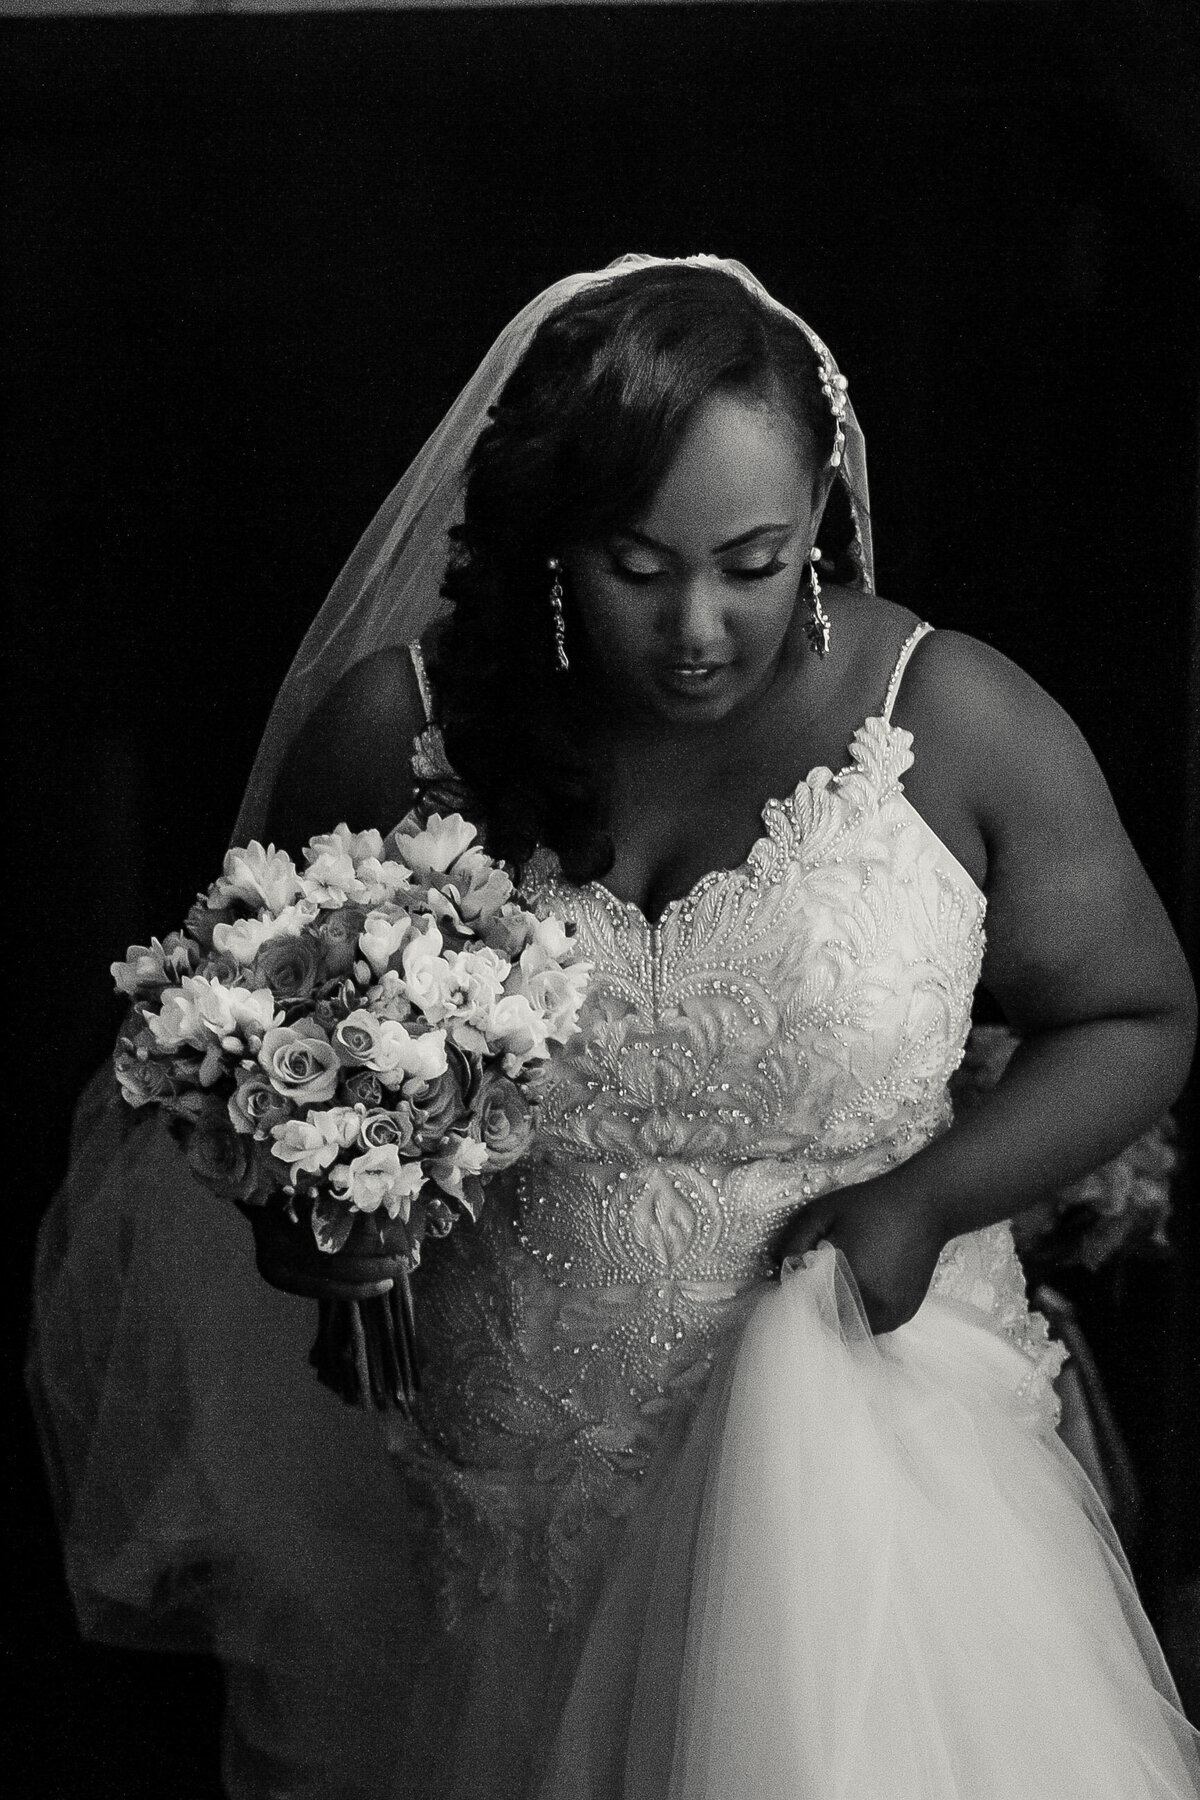 njeri-bishota-lauren-ashley-wedding-dress-flowers-emotion-black-and-white